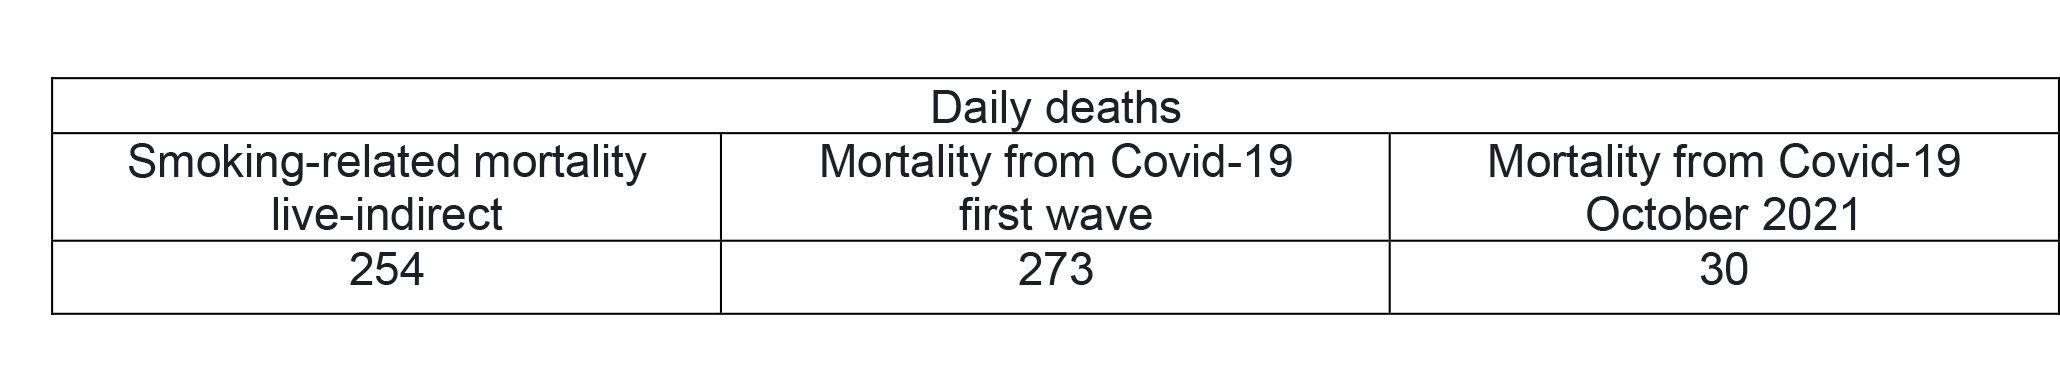 Daily deaths